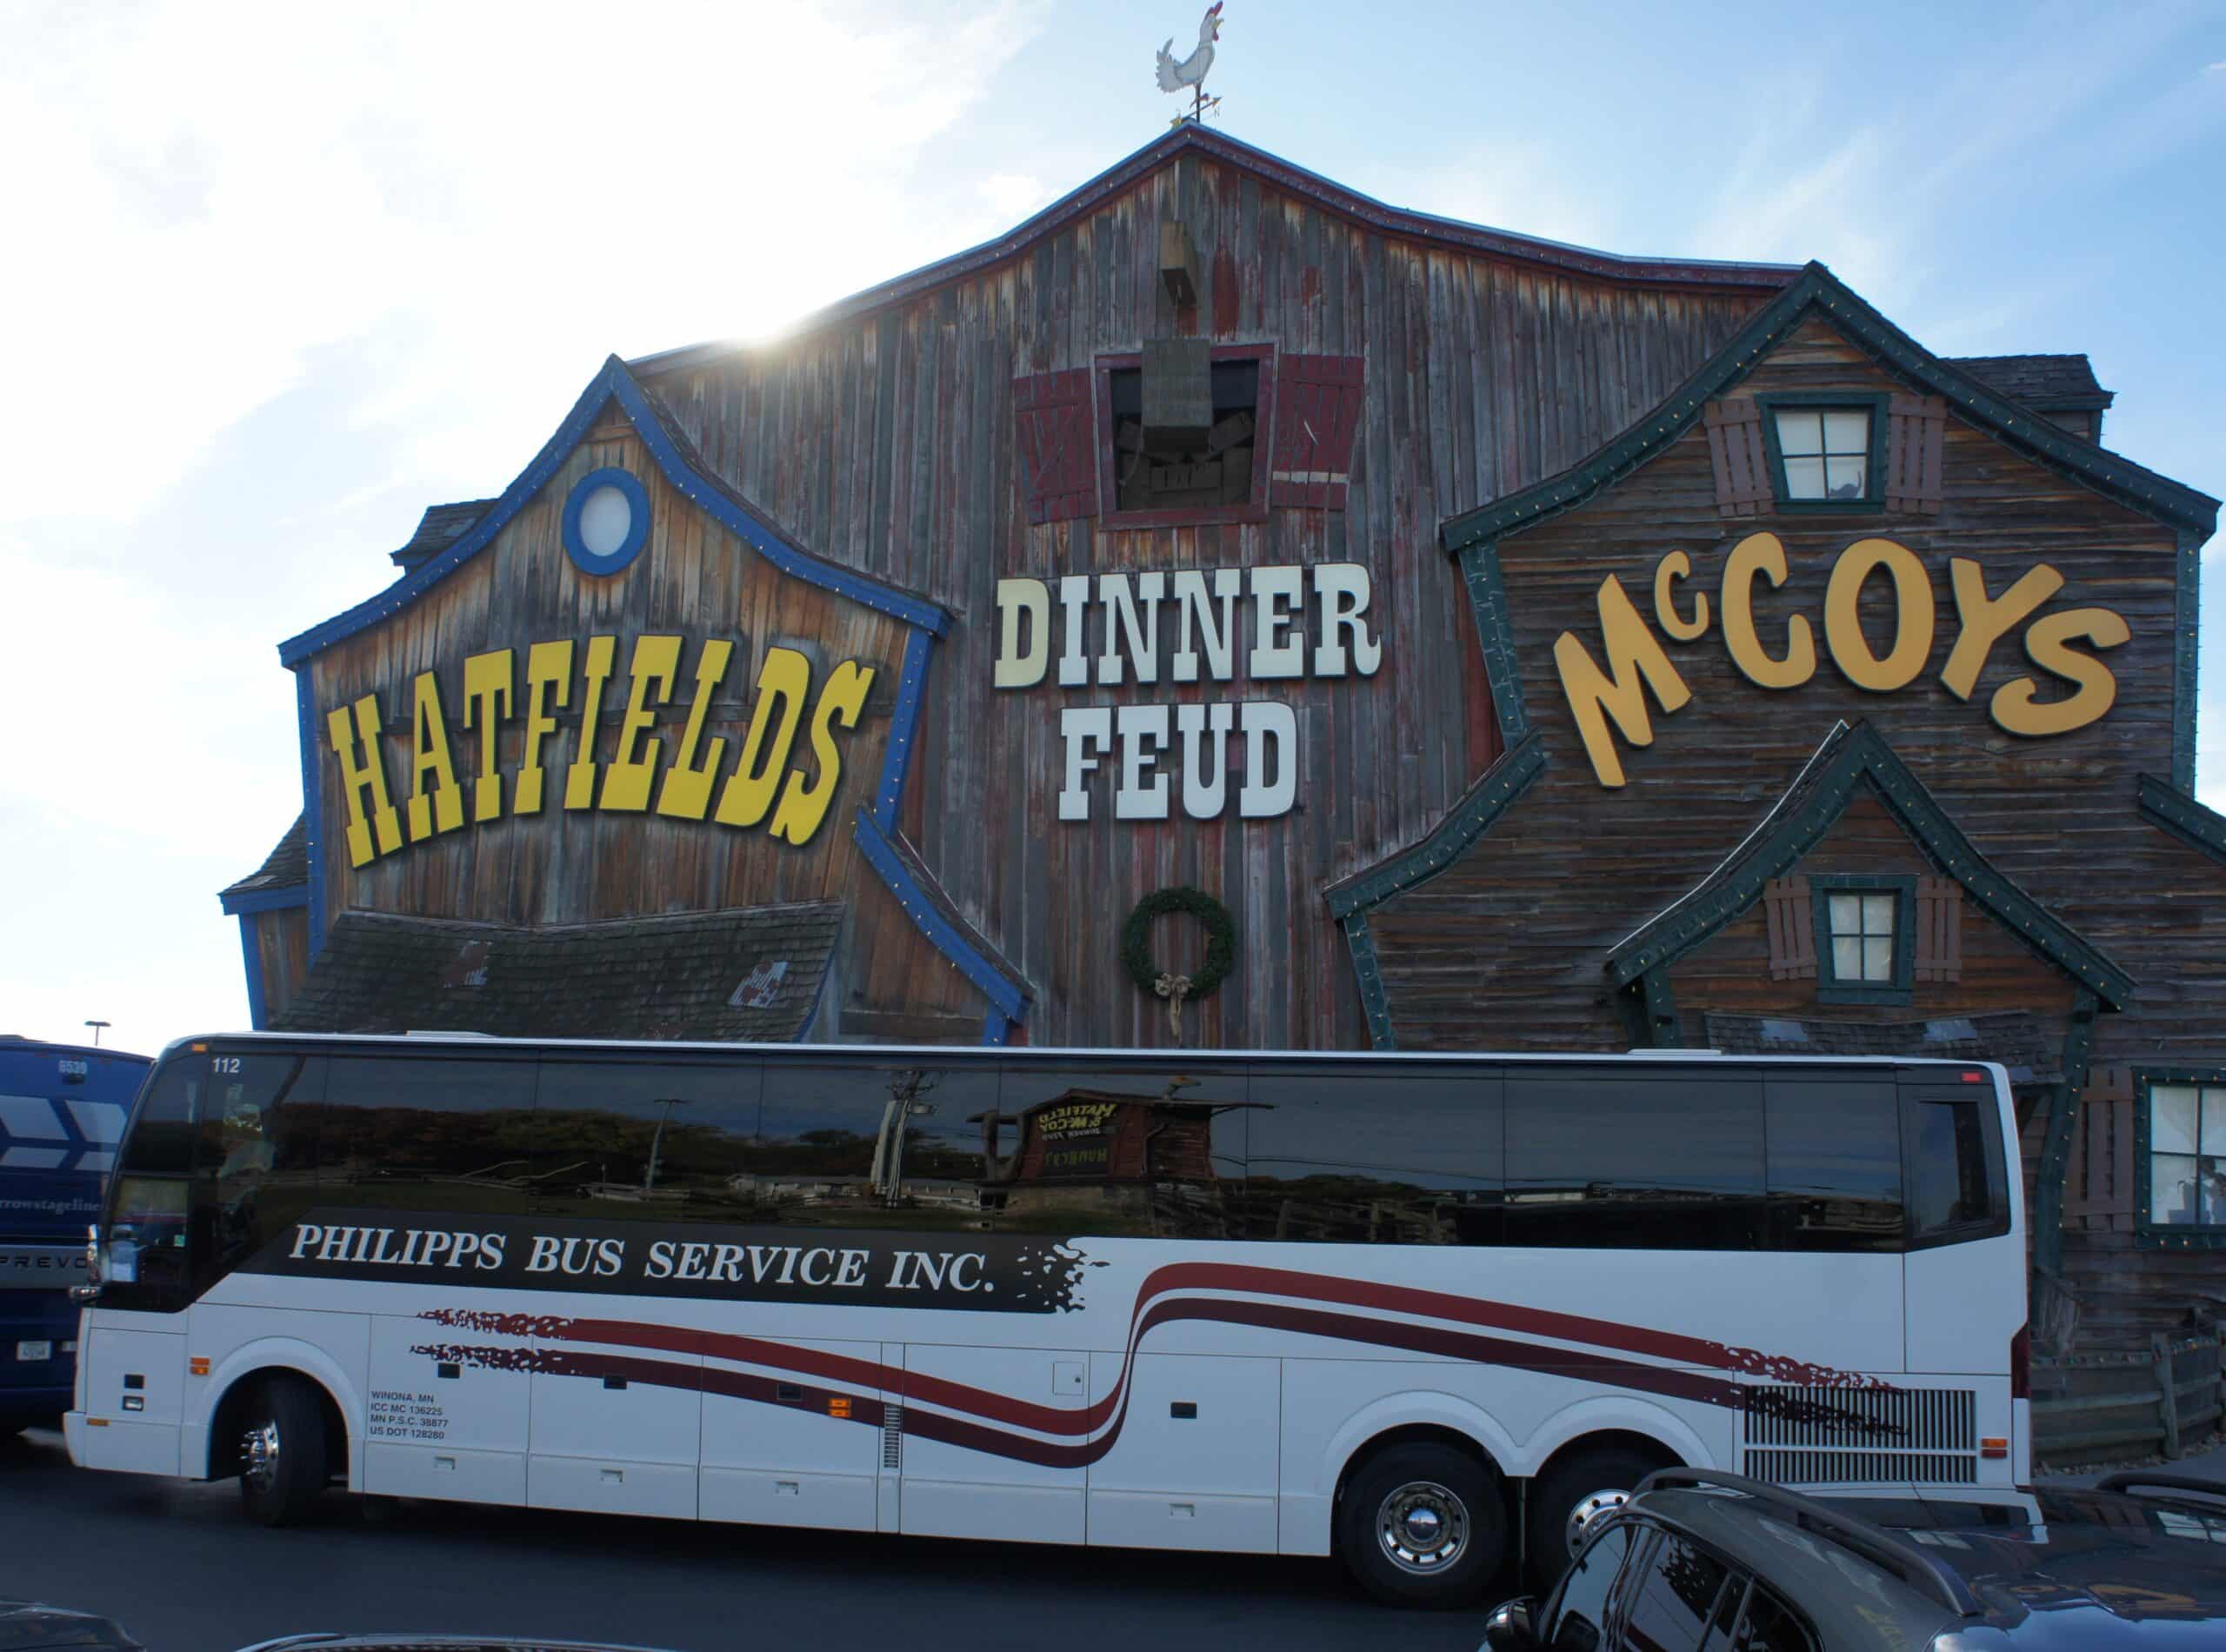 Hatfield's and McCoy's